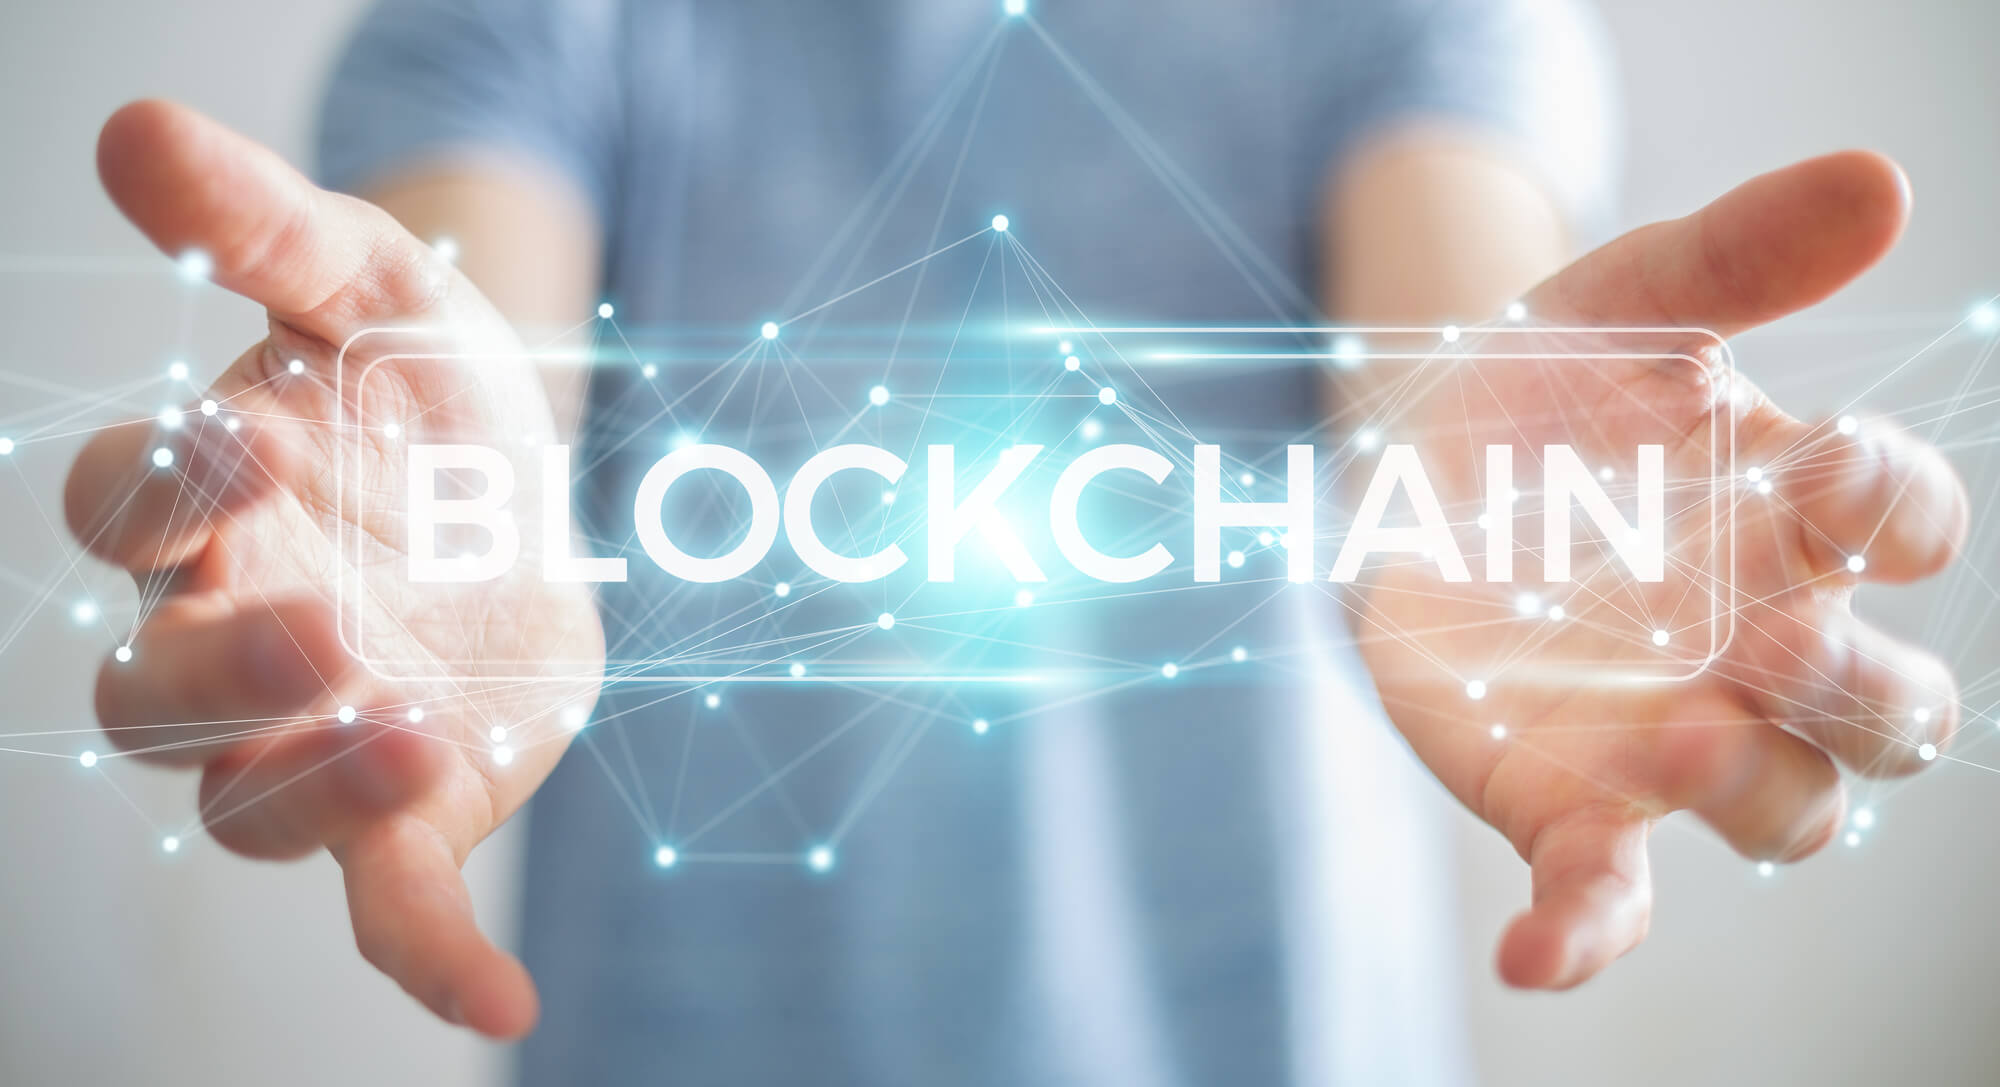 “Blockchain Developer” becoming the top emerging job in the U.S.